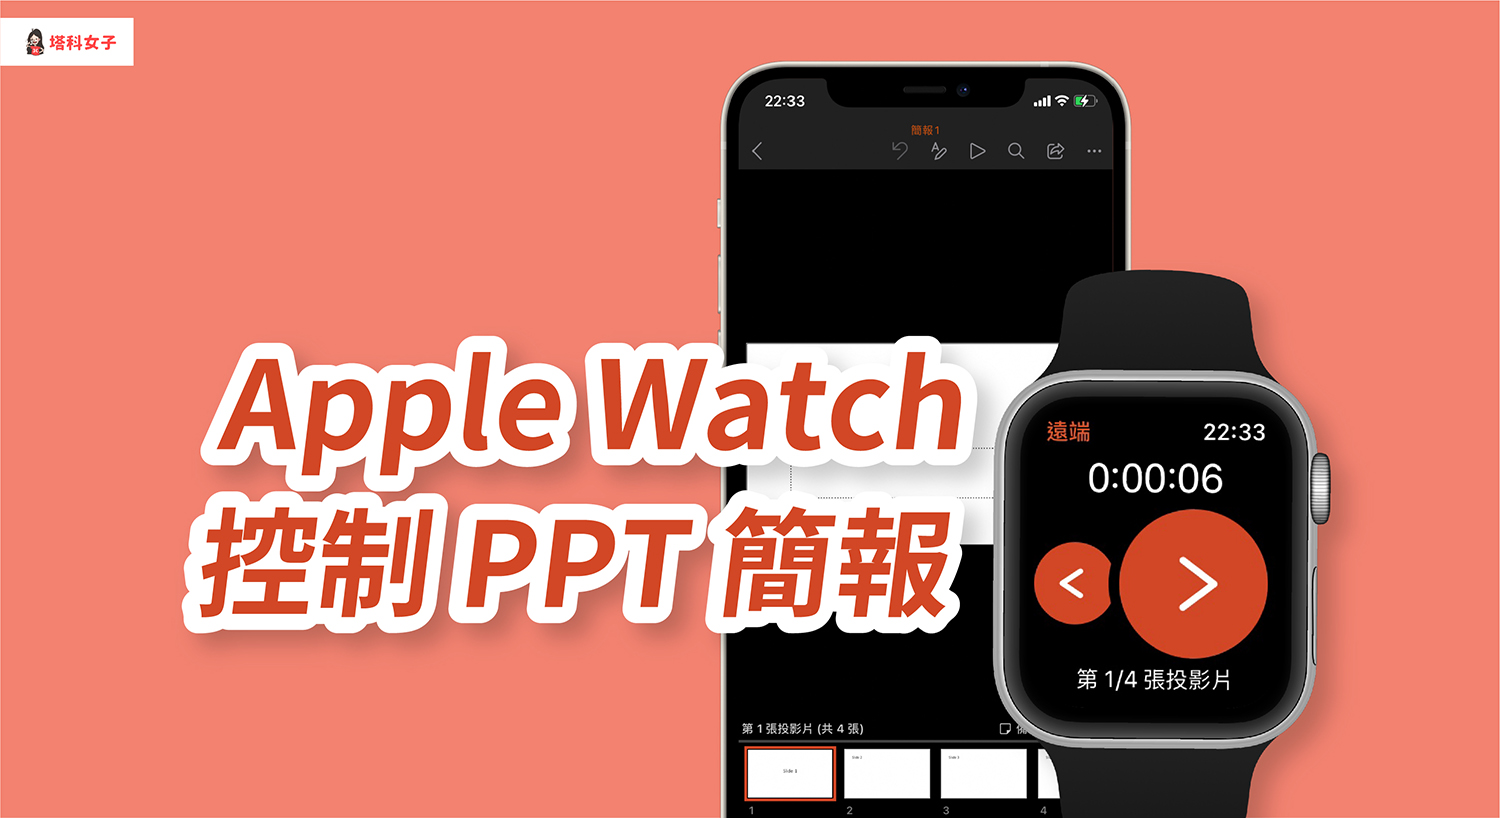 Apple Watch 如何控制 PowerPoint (PPT) 簡報？完整教學